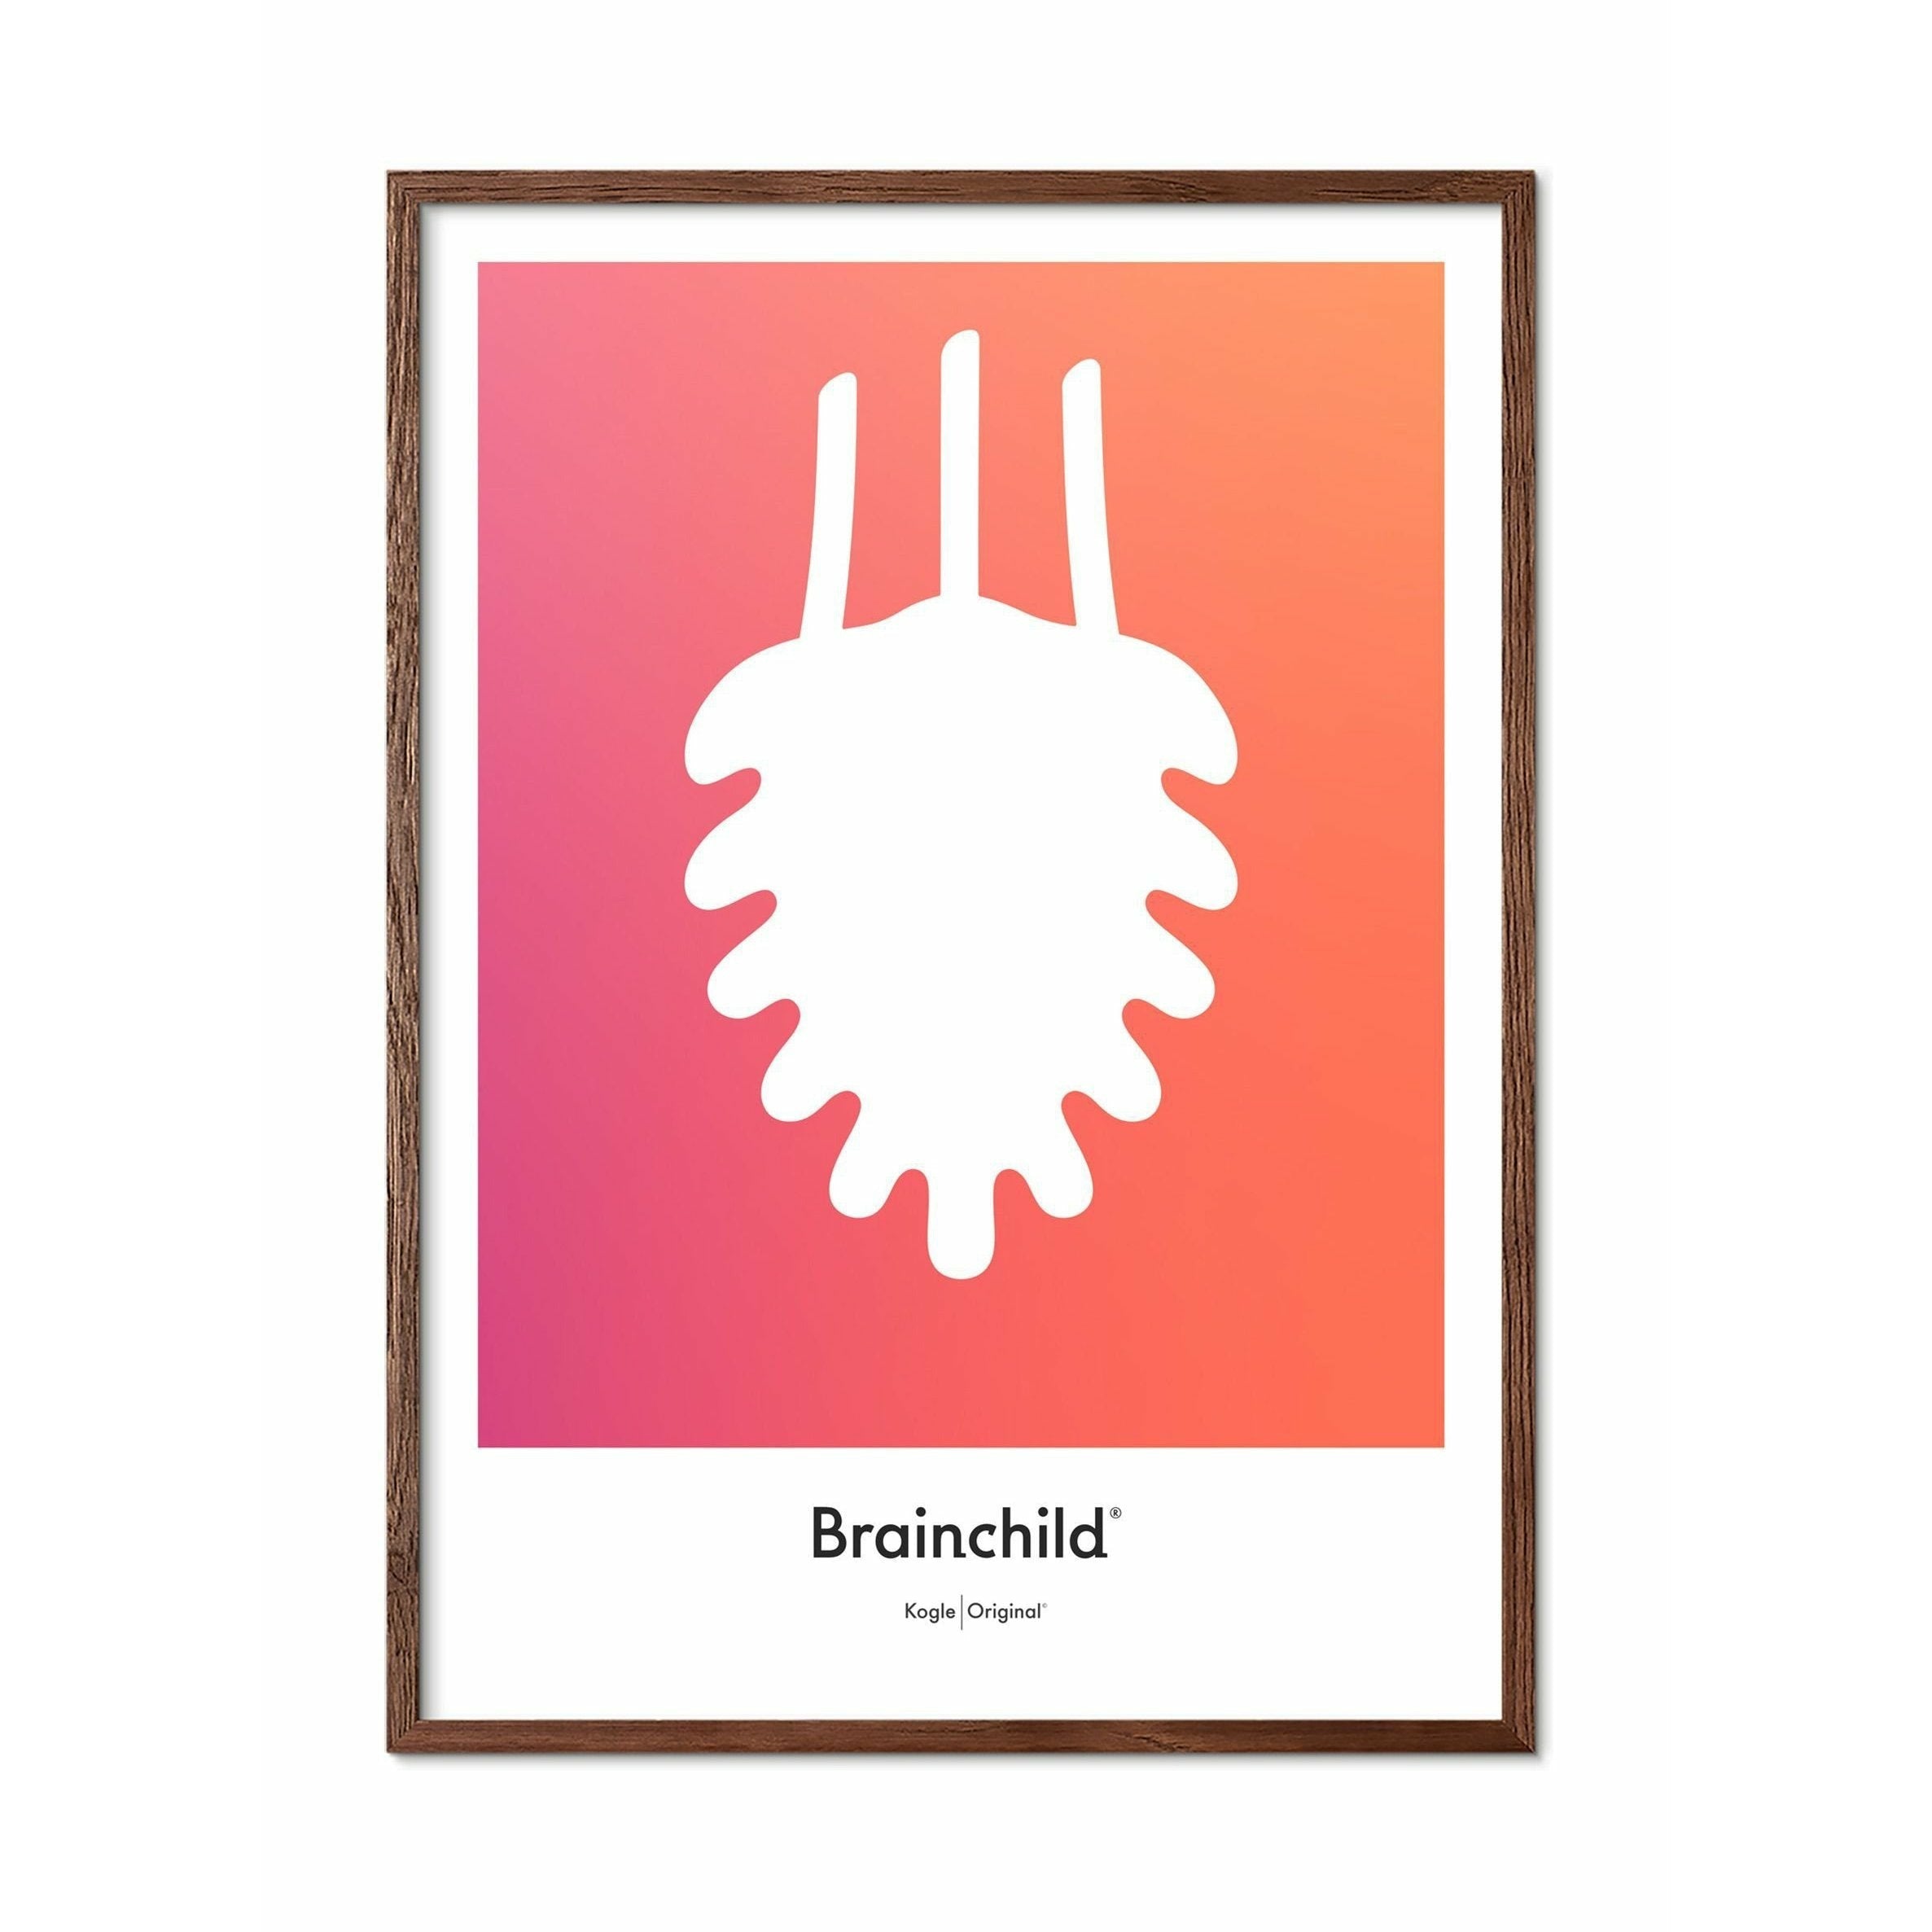 Brainchild Kogle Designikon Plakat, Ramme I Mørkt Træ 50X70 Cm, Orange